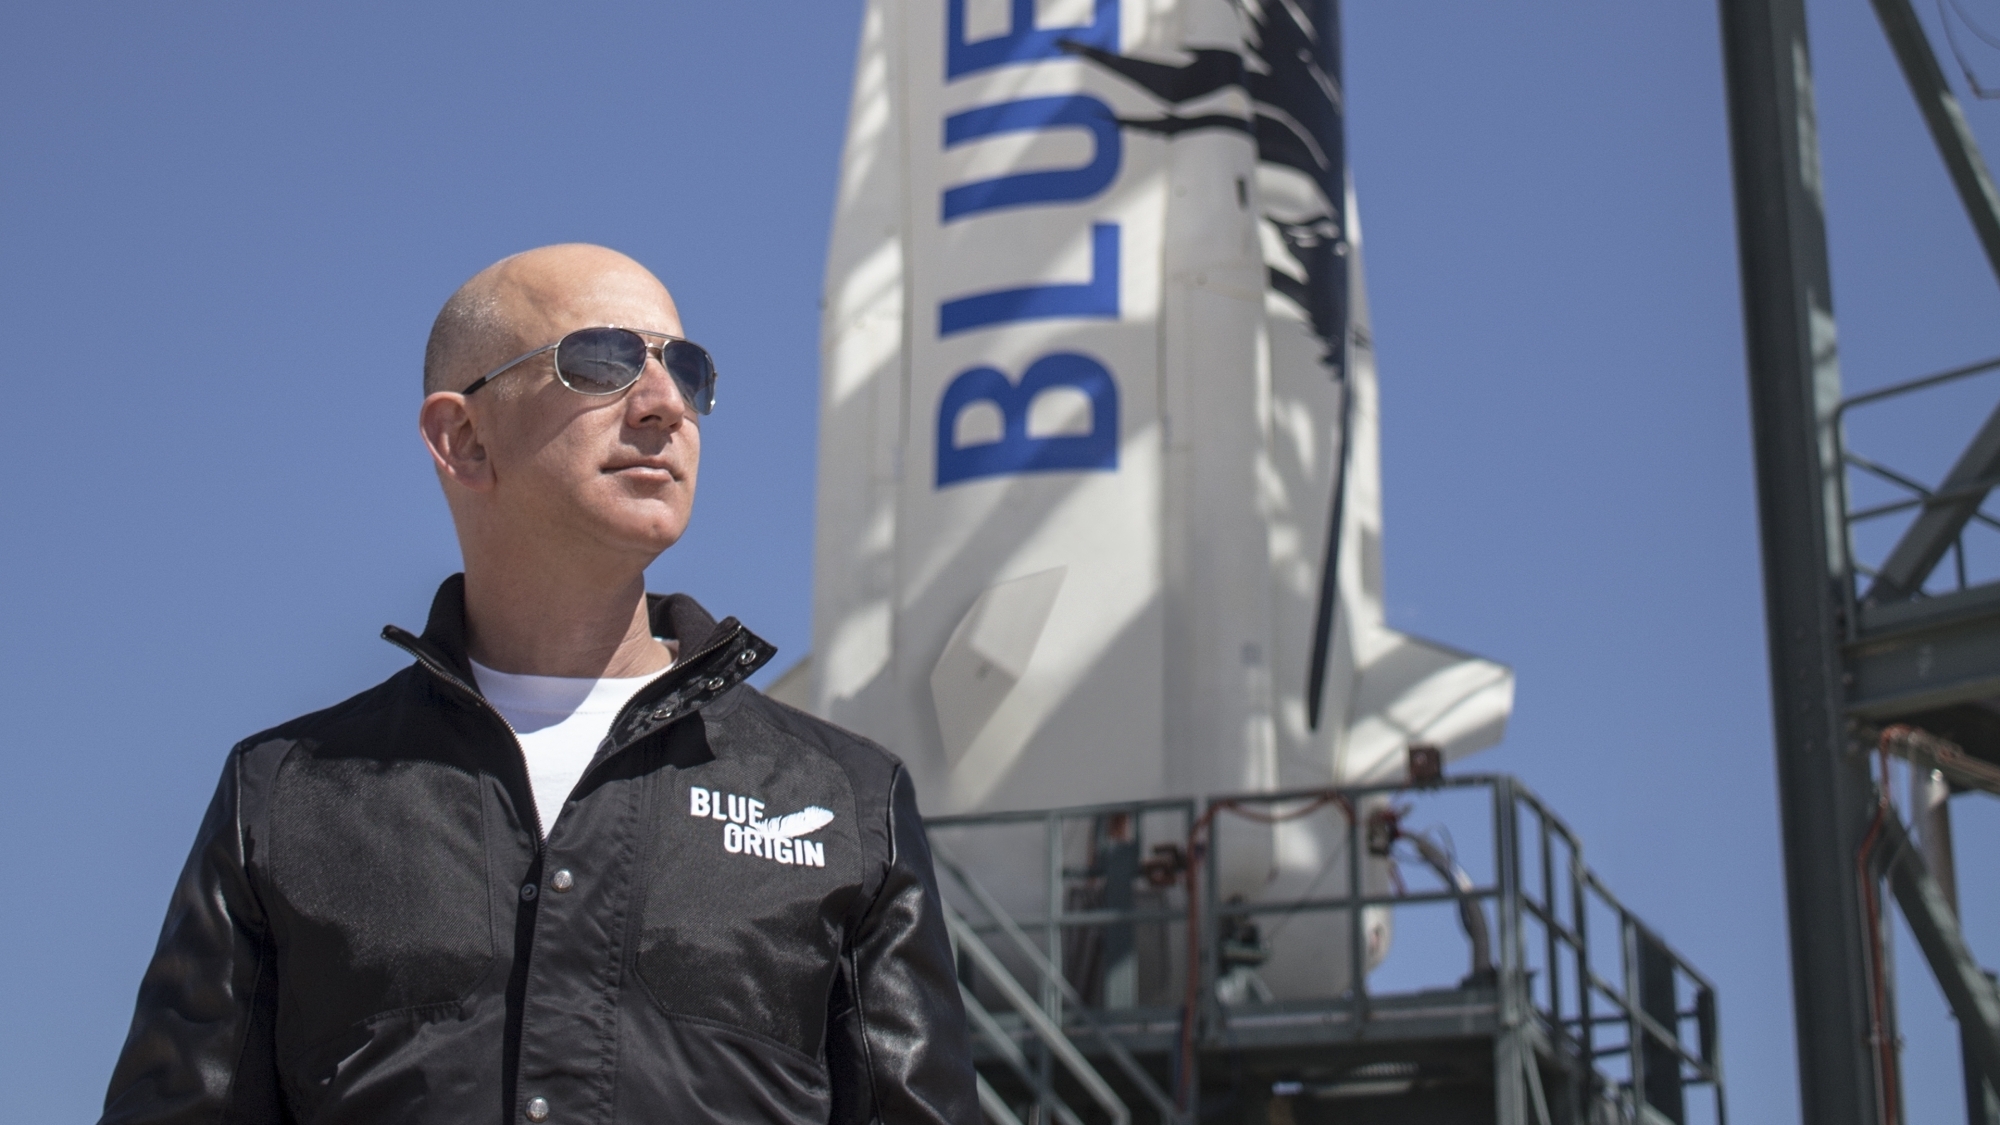 Bezos heats up space race against Musk, aims Blue Origin commercial flight next year